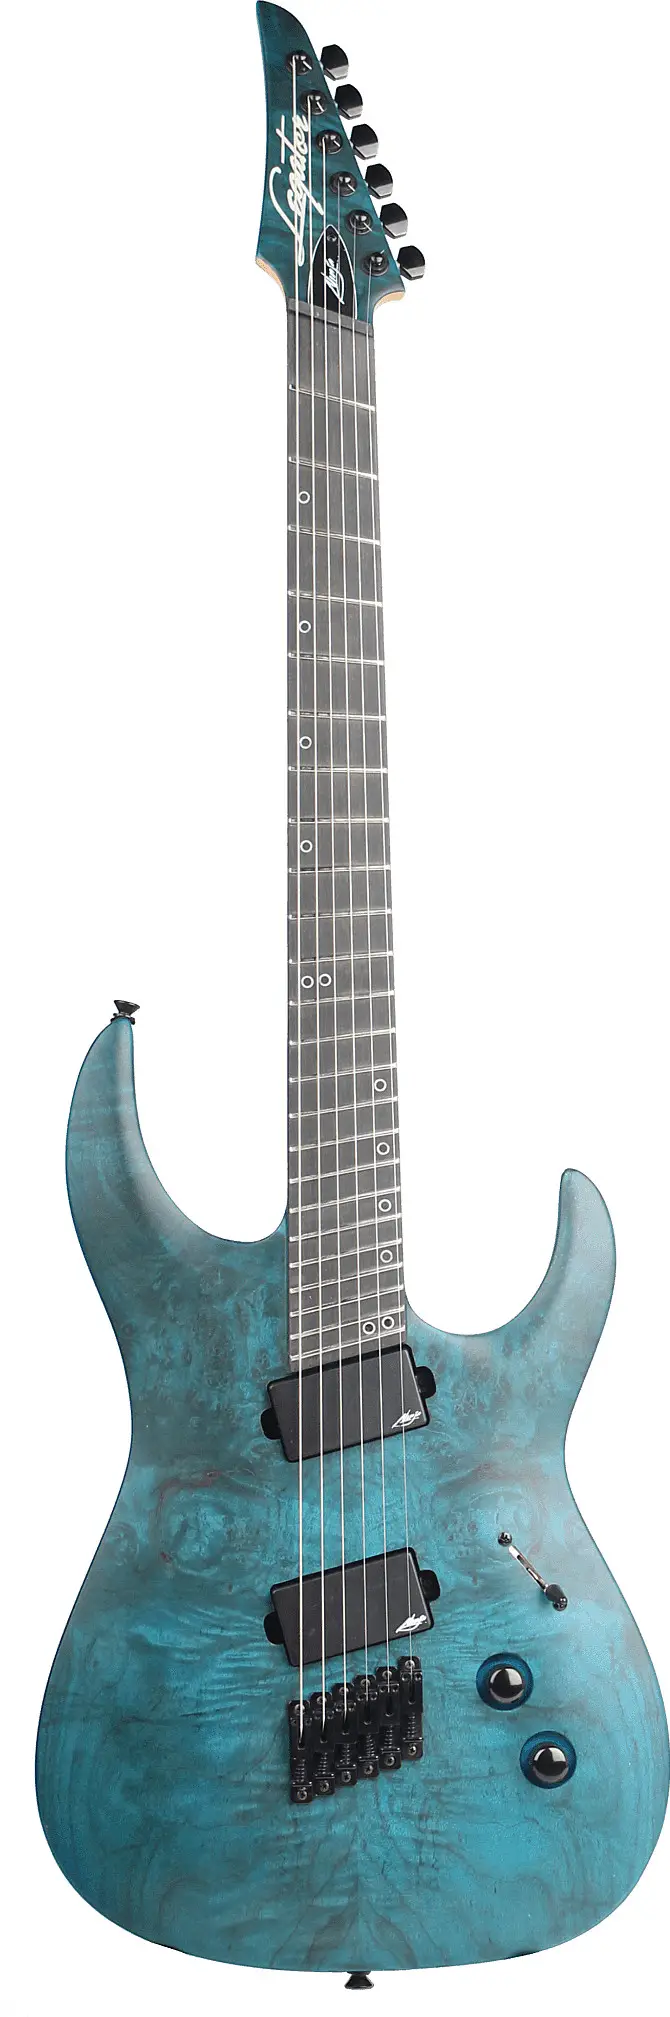 Ninja R 300-PRO Multi Scale 6 string by Legator Guitars